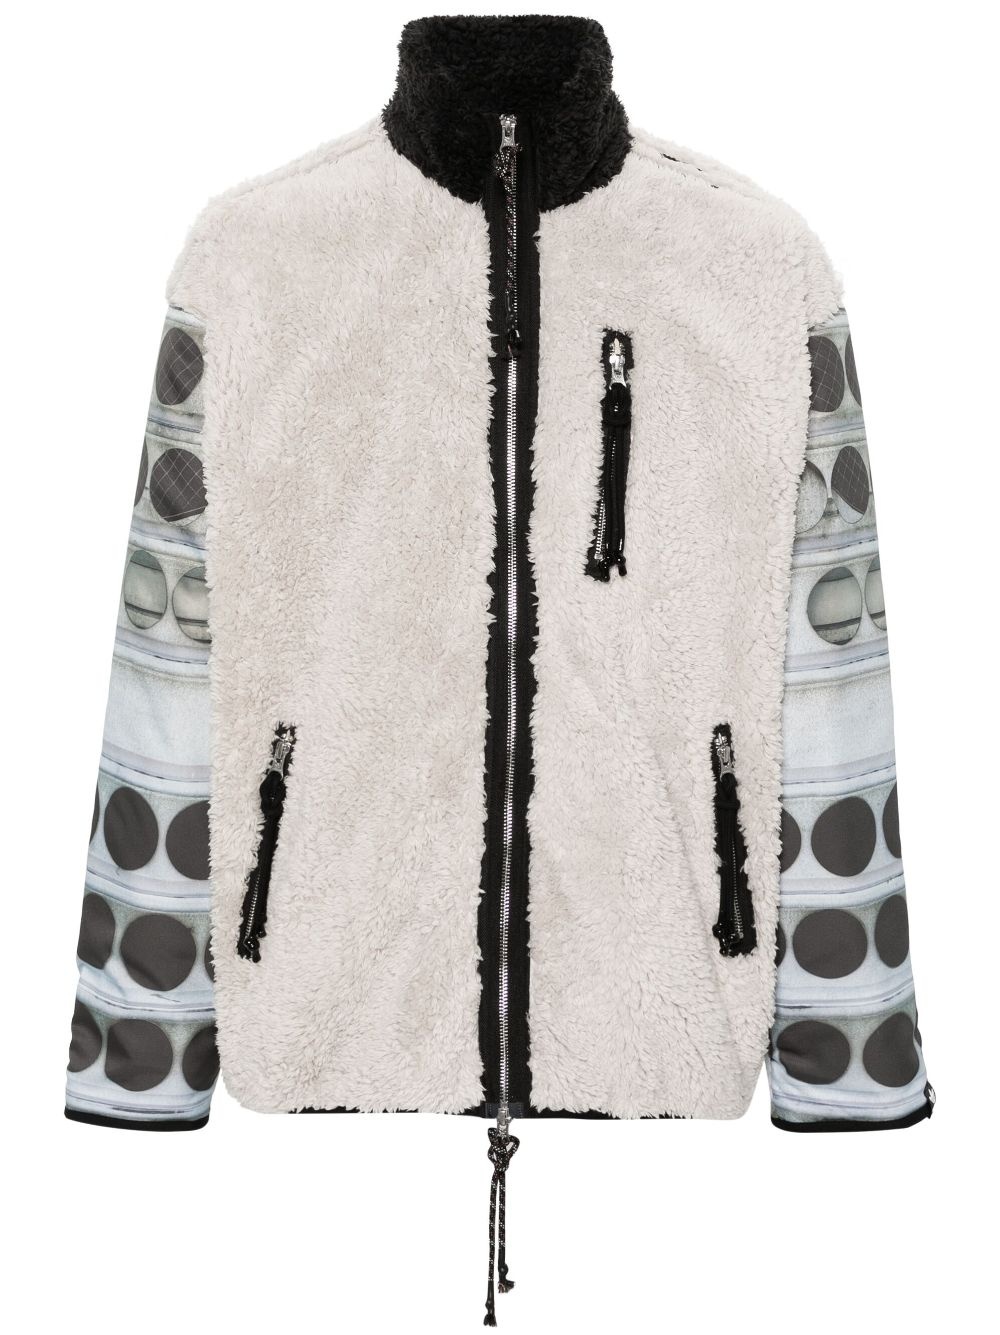 x SFTM fleece jacket - 1